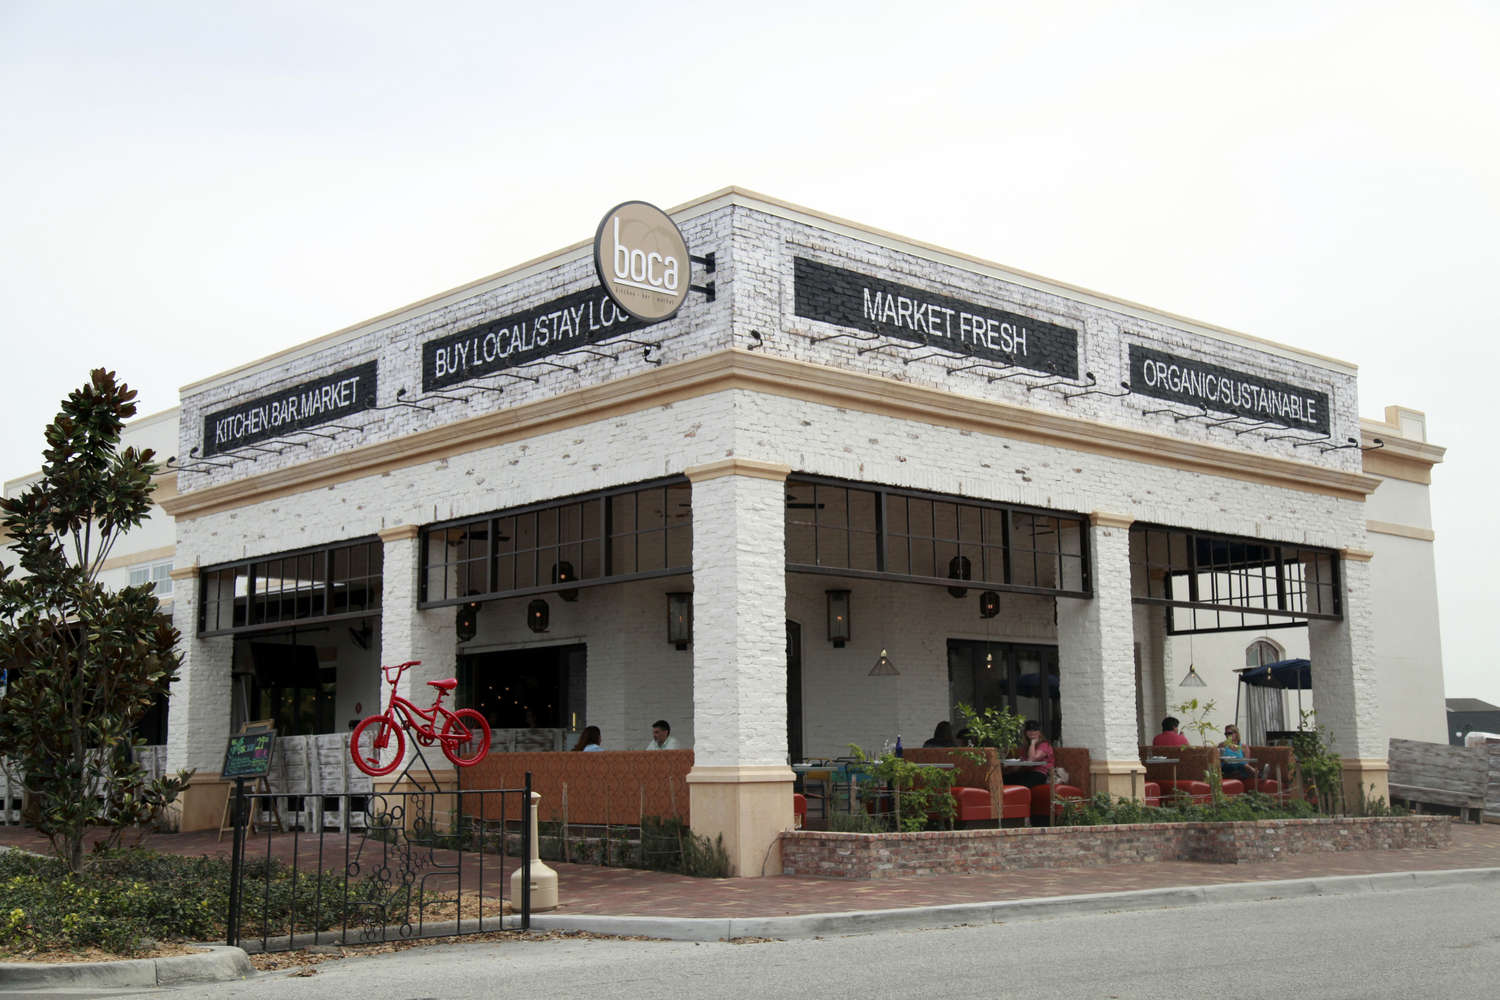 Boca restaurant building